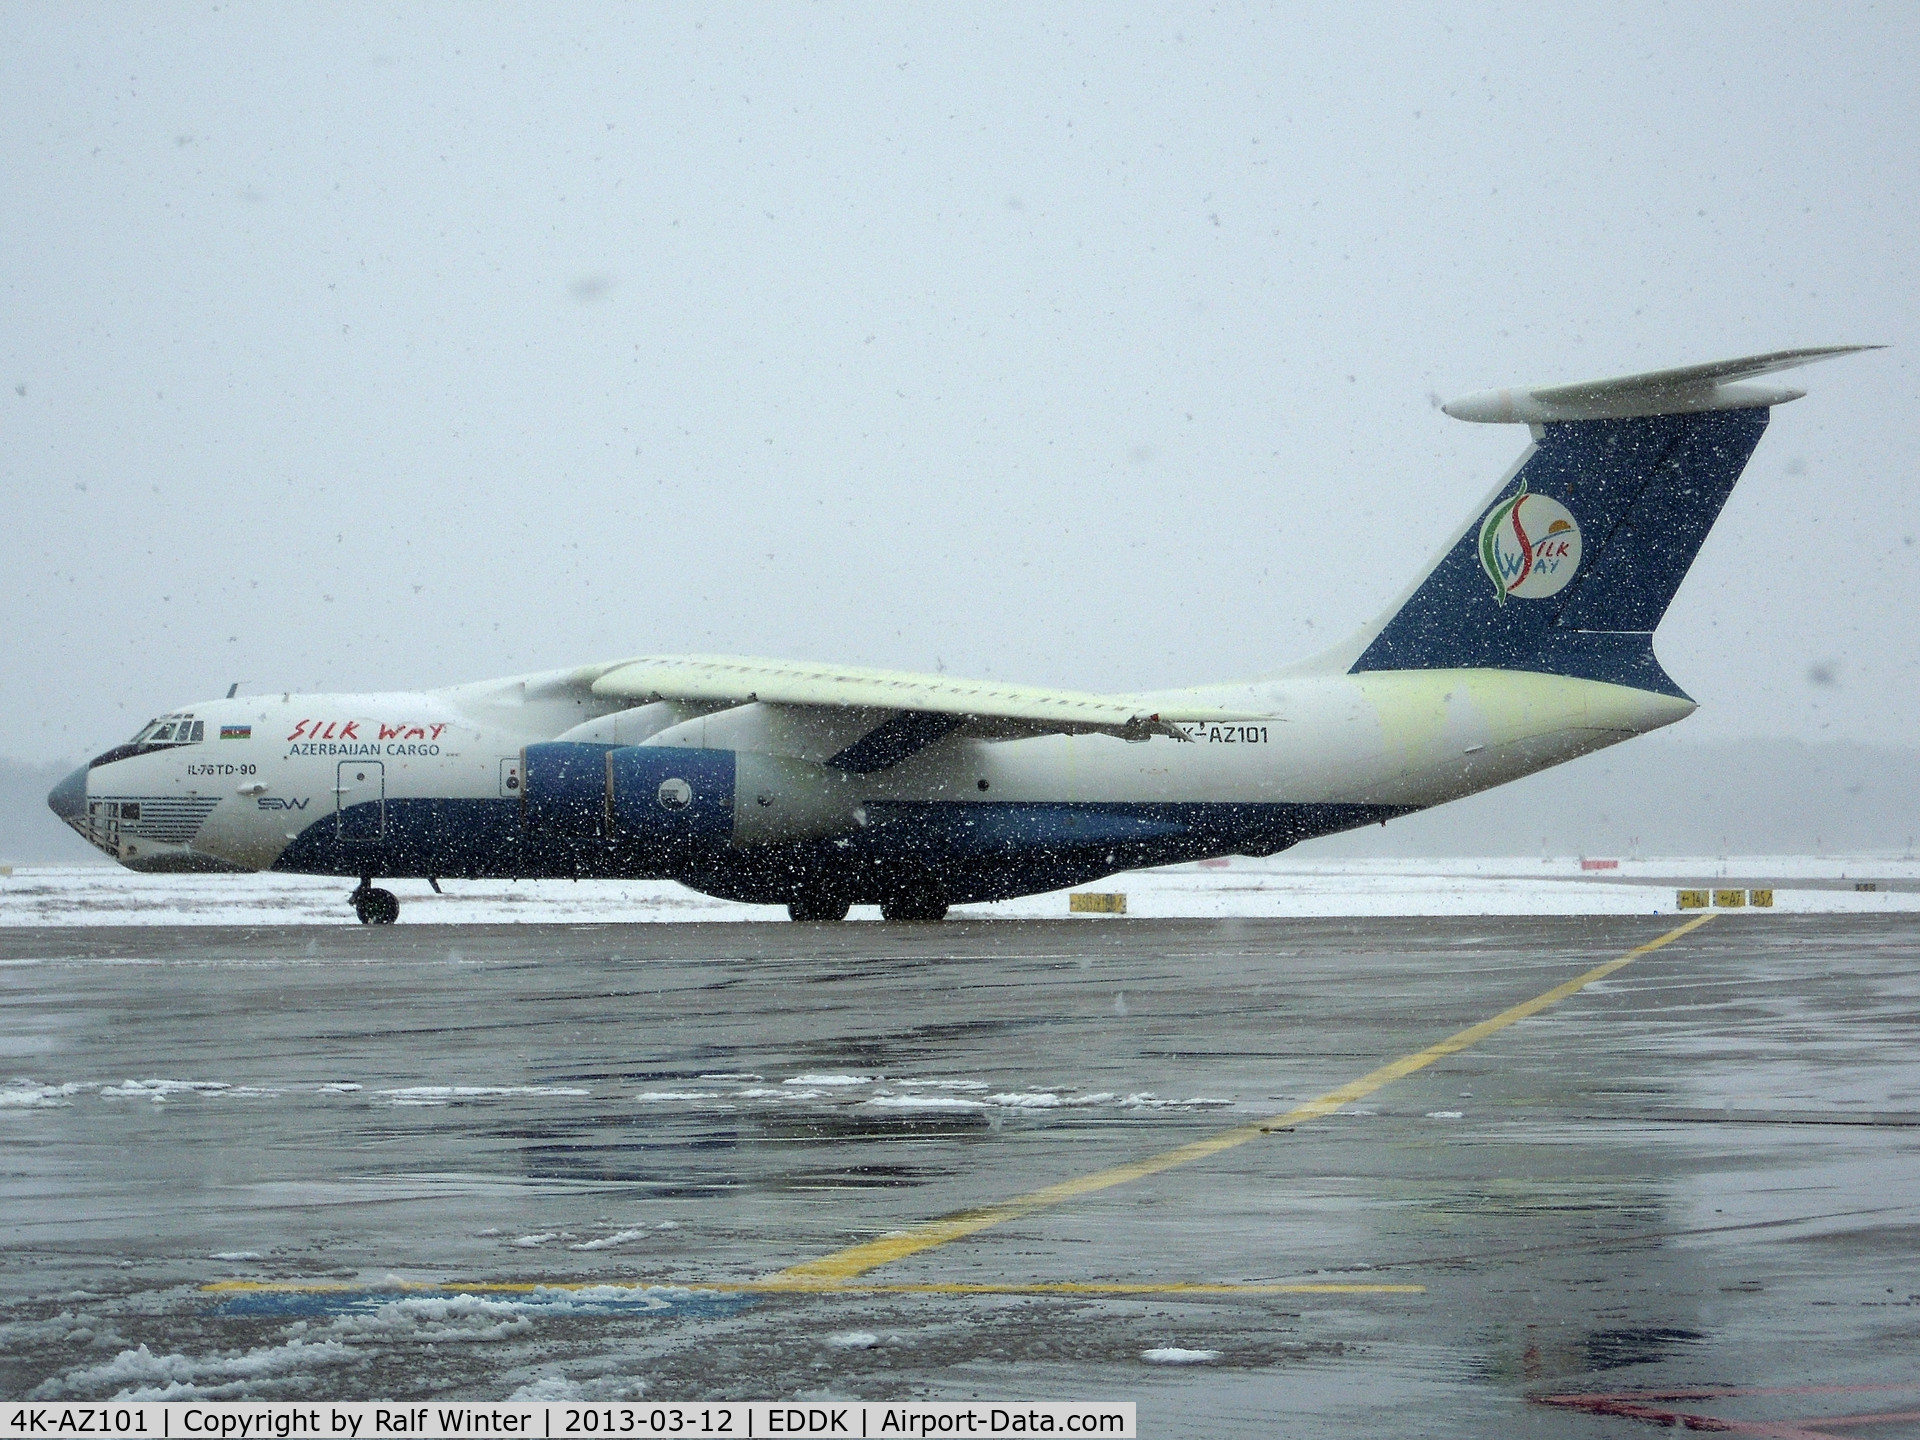 4K-AZ101, 1997 Ilyushin Il-76TD-90VD C/N 1063420716, Ilyushin Il-76TD-90VD - Silk Way Airlines - 4K-AZ101 - 12.03.2013 - CGN